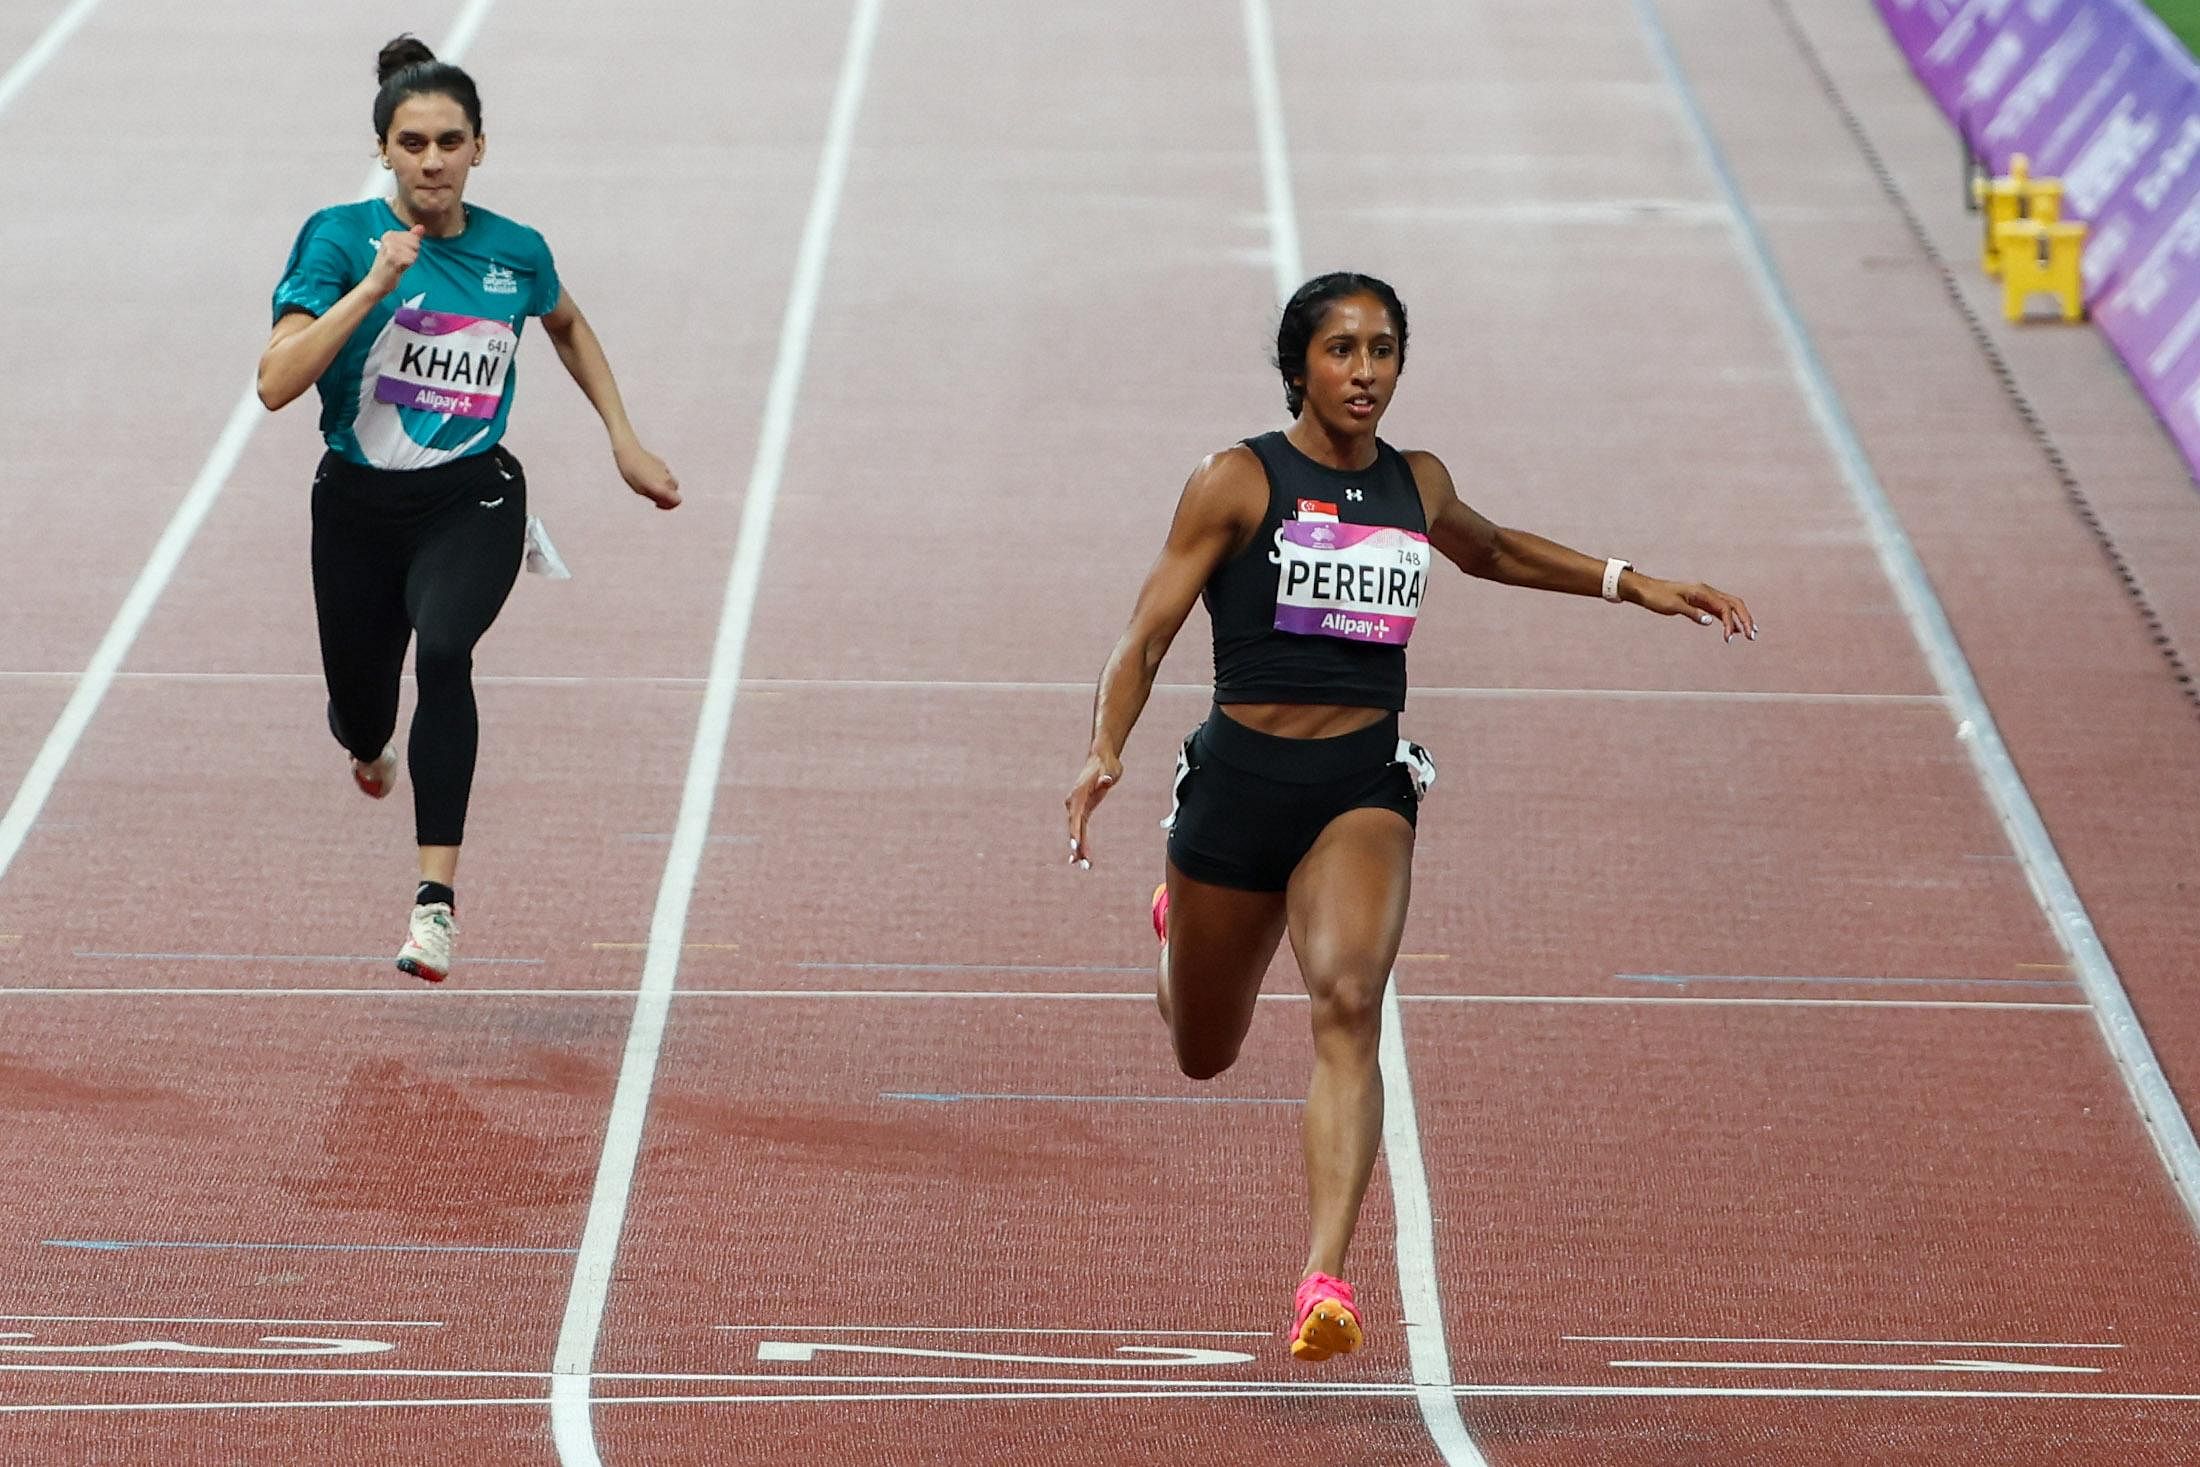 Singapore sprint queen Shanti Pereira breaks 400m national record